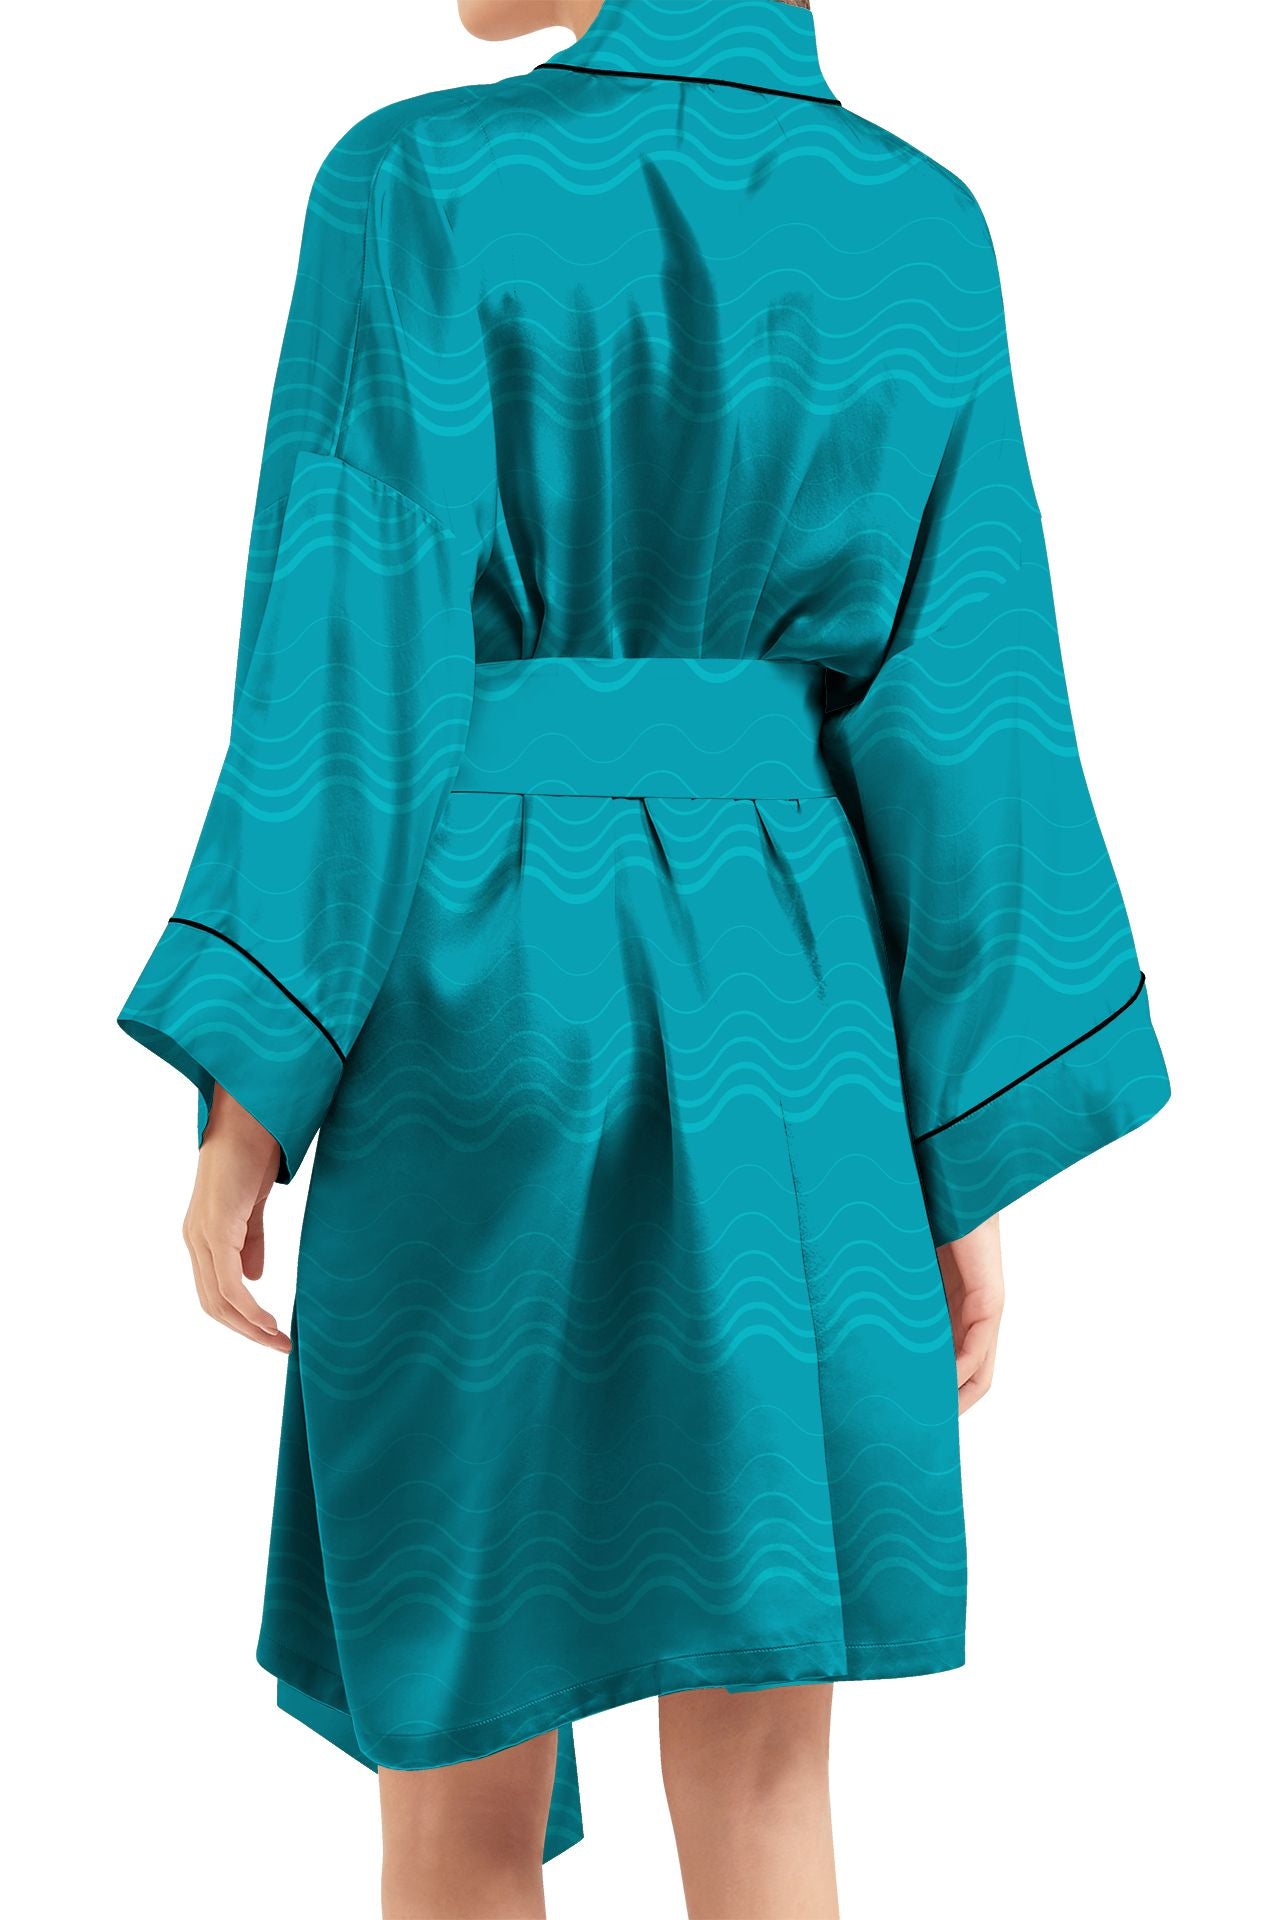 "Kyle X Shahida" "blue robe womens" "kimono short dresses" "women's short kimono"